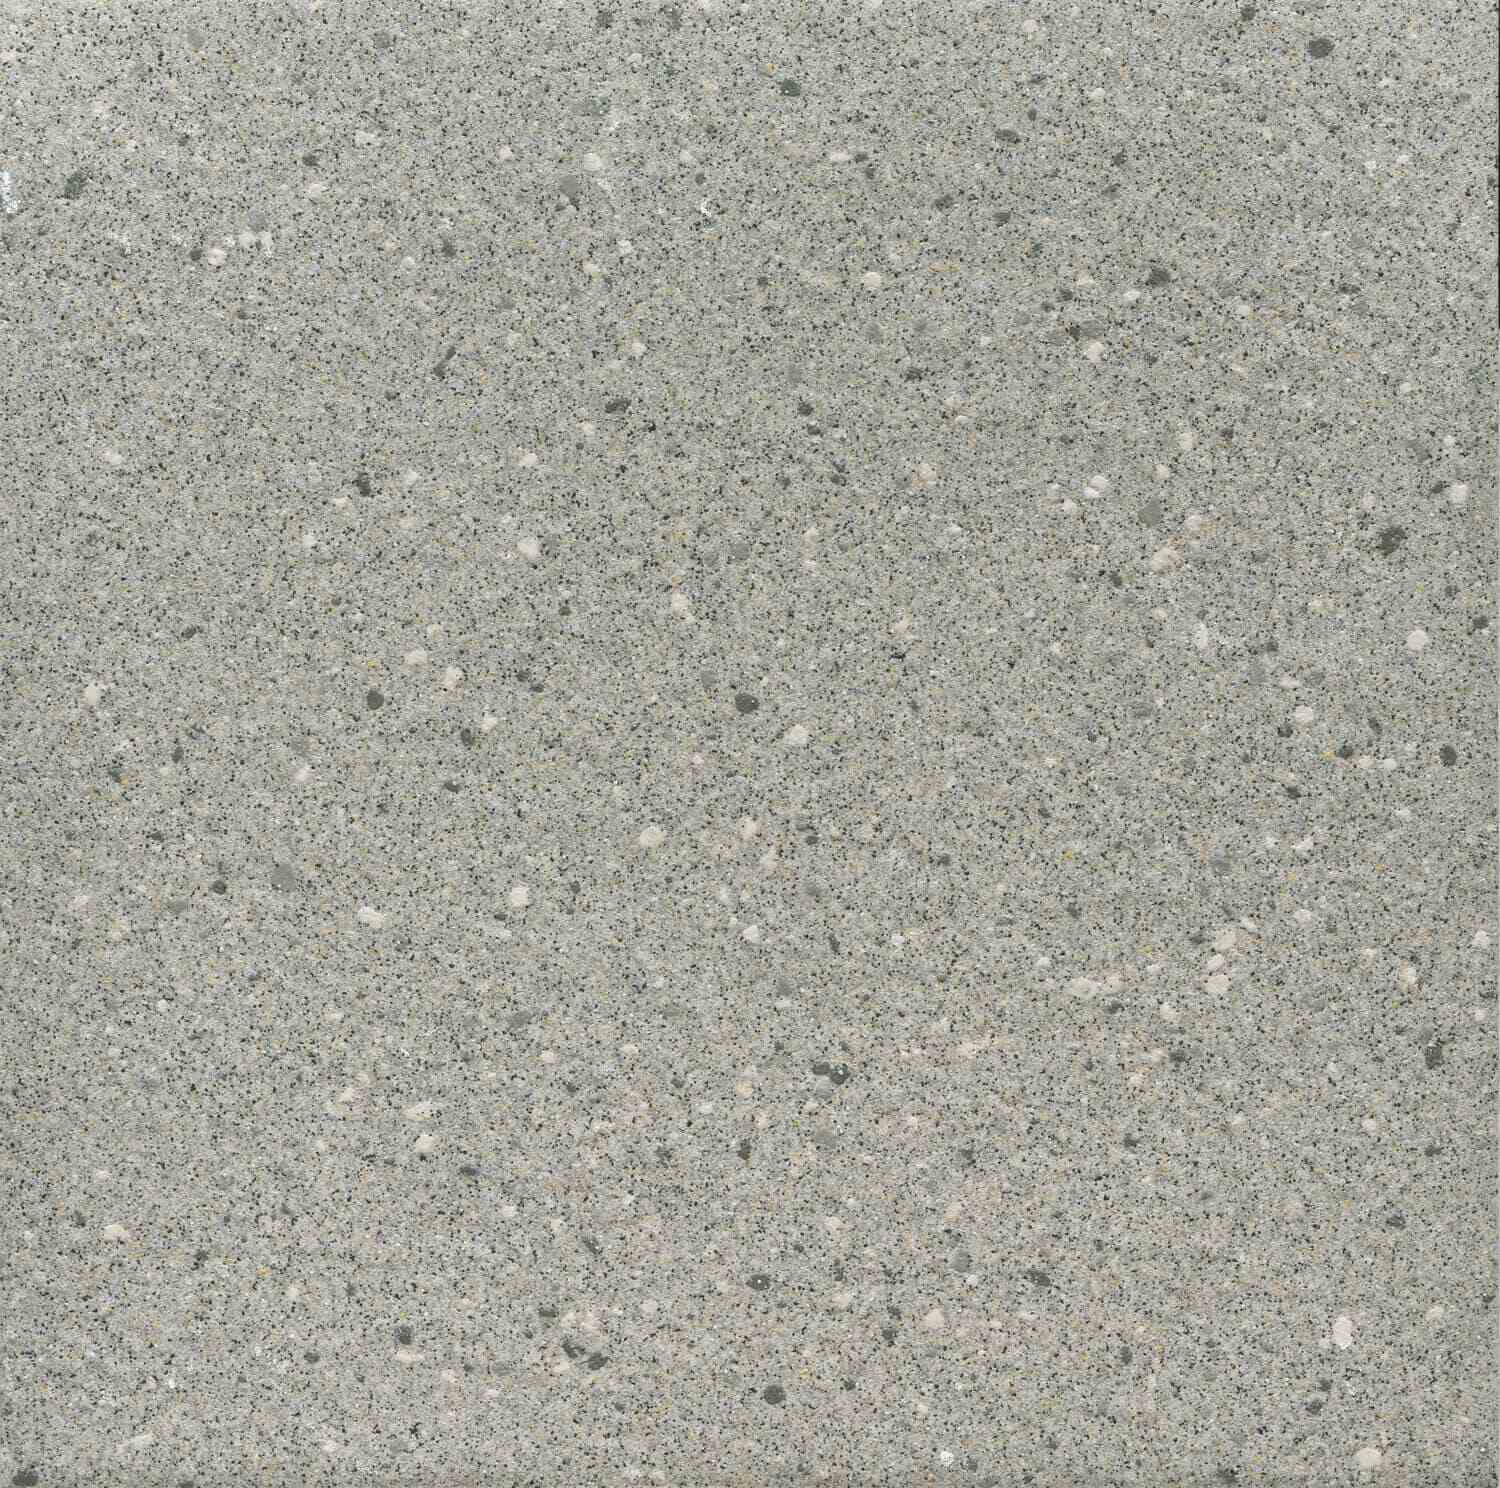 Dorset Woolliscroft Pebbled Aggregate Steel Grey Slip Resistant Quarry Tile 300x300mm